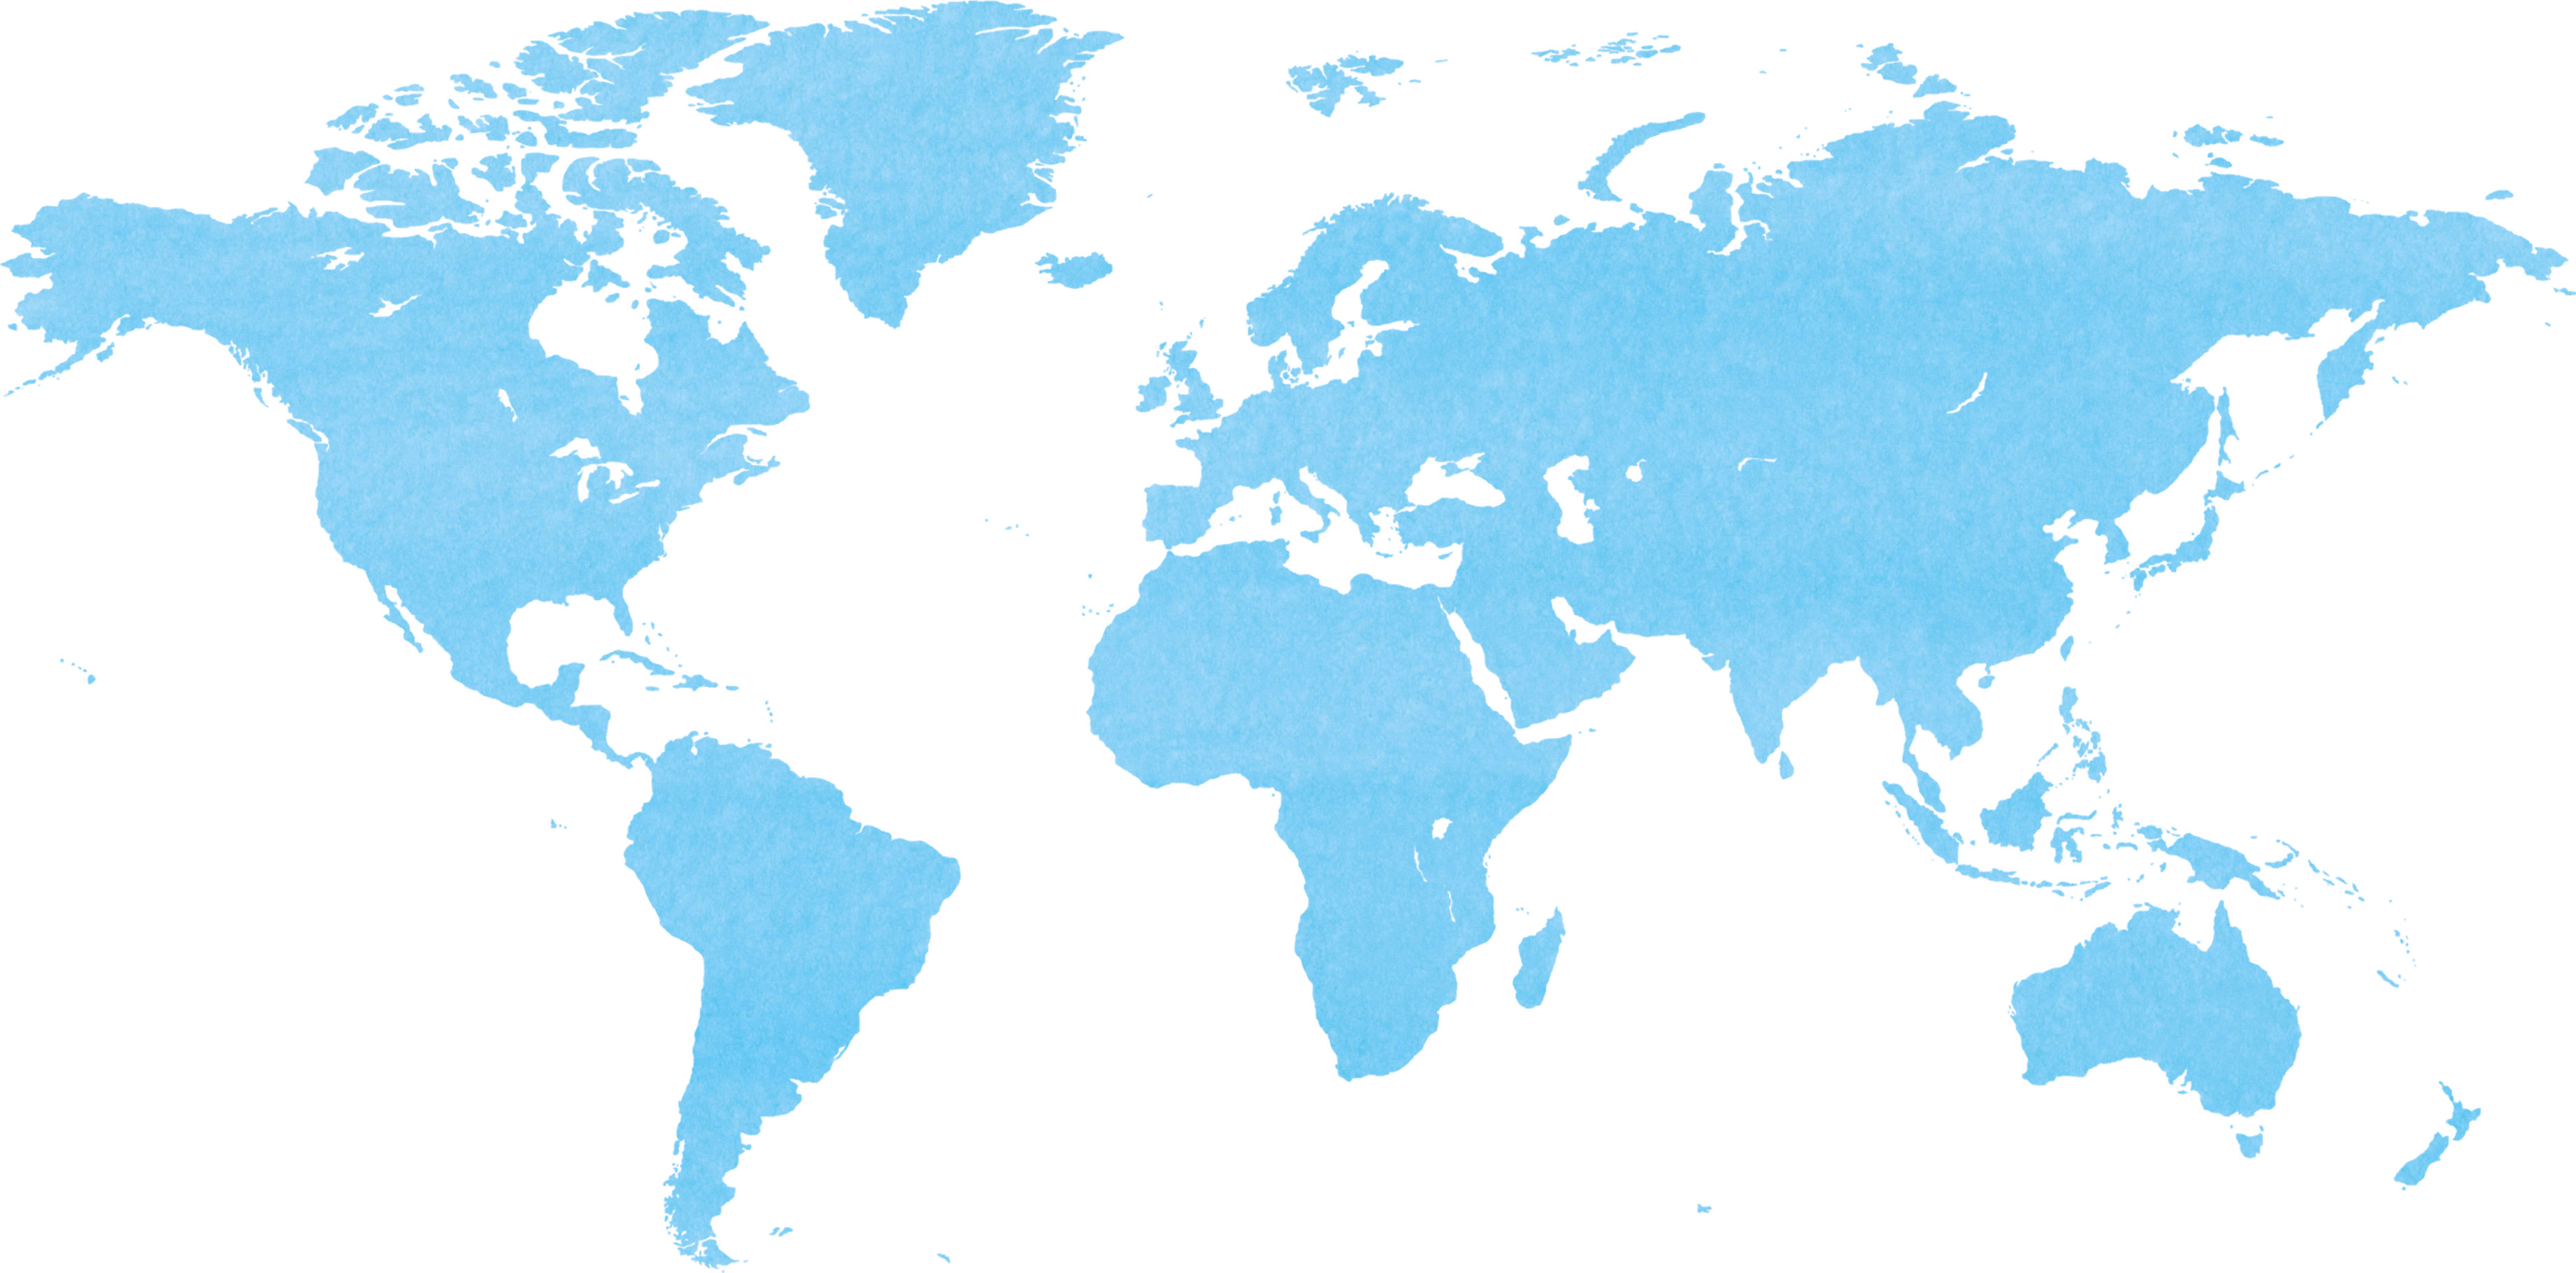 A map depicting the continents of the world, labeled with flags marking Honolulu, New York, London, Berlin, Singapore, Taipei, Ginowan, and Mt. Fuji/Lake Kawaguchiko.